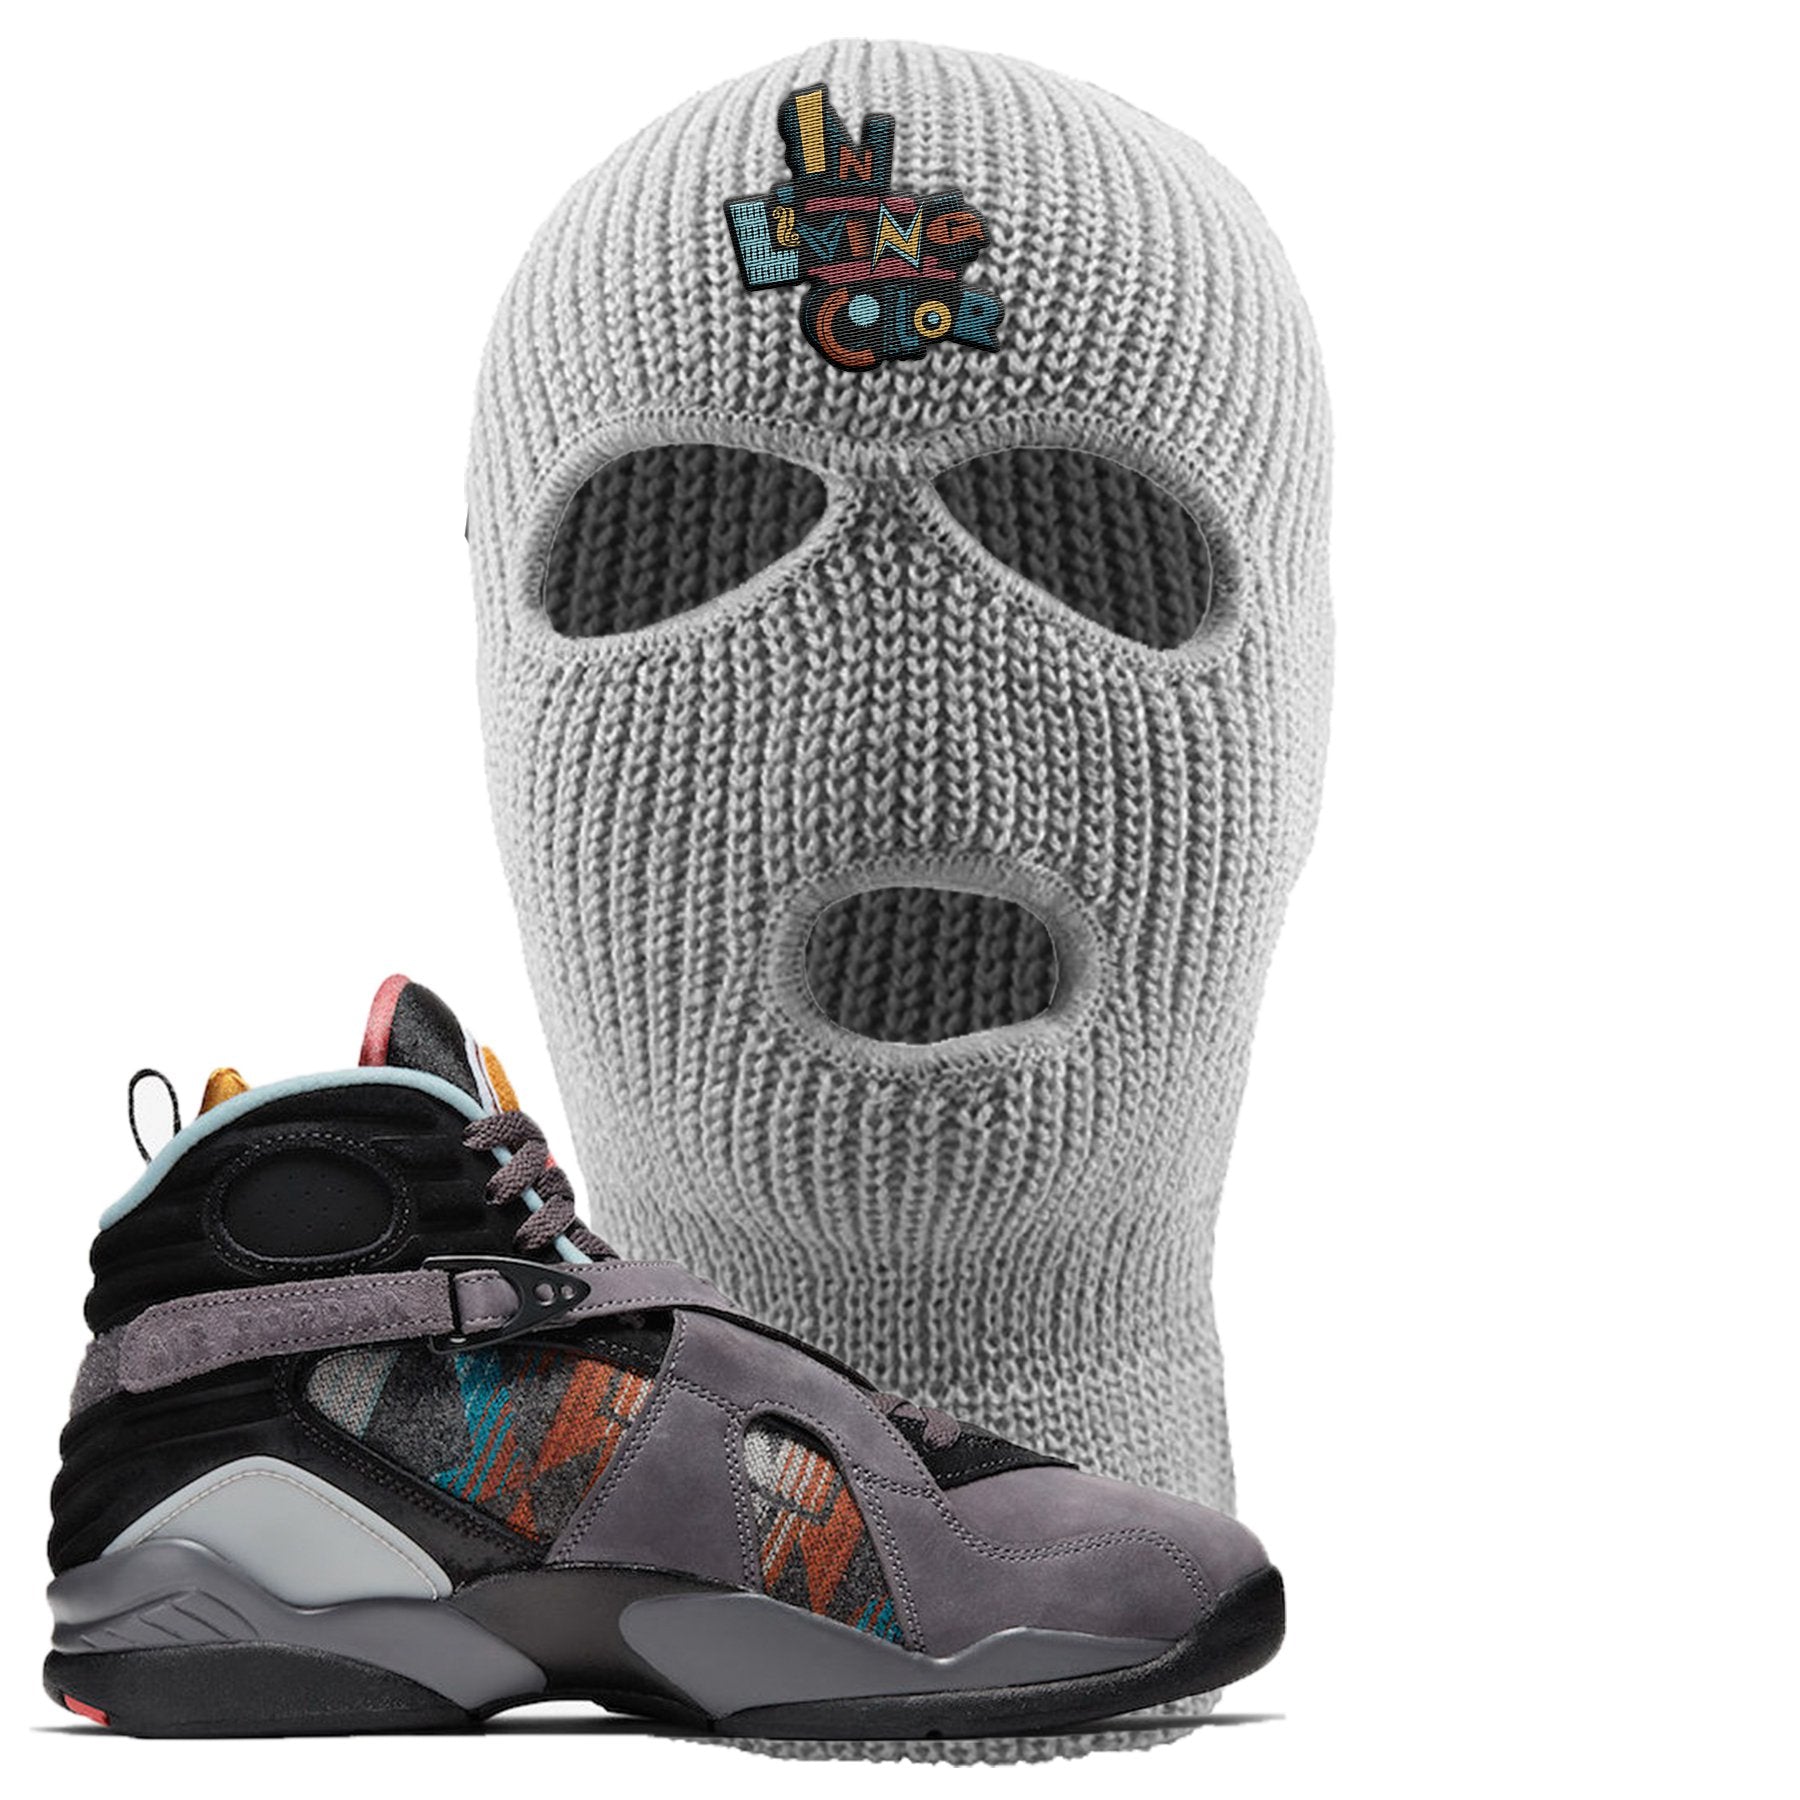 Jordan 8 N7 Pendleton In Living Color Light Gray Sneaker Hook Up Ski Mask